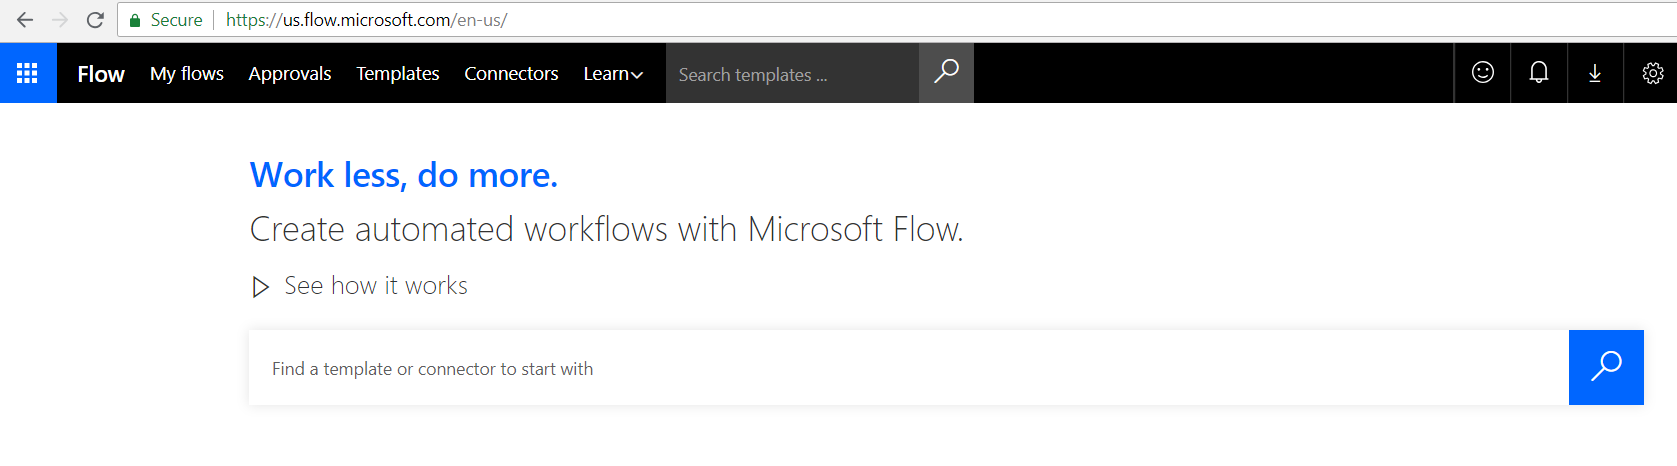 Excel sheet using Microsoft Flow